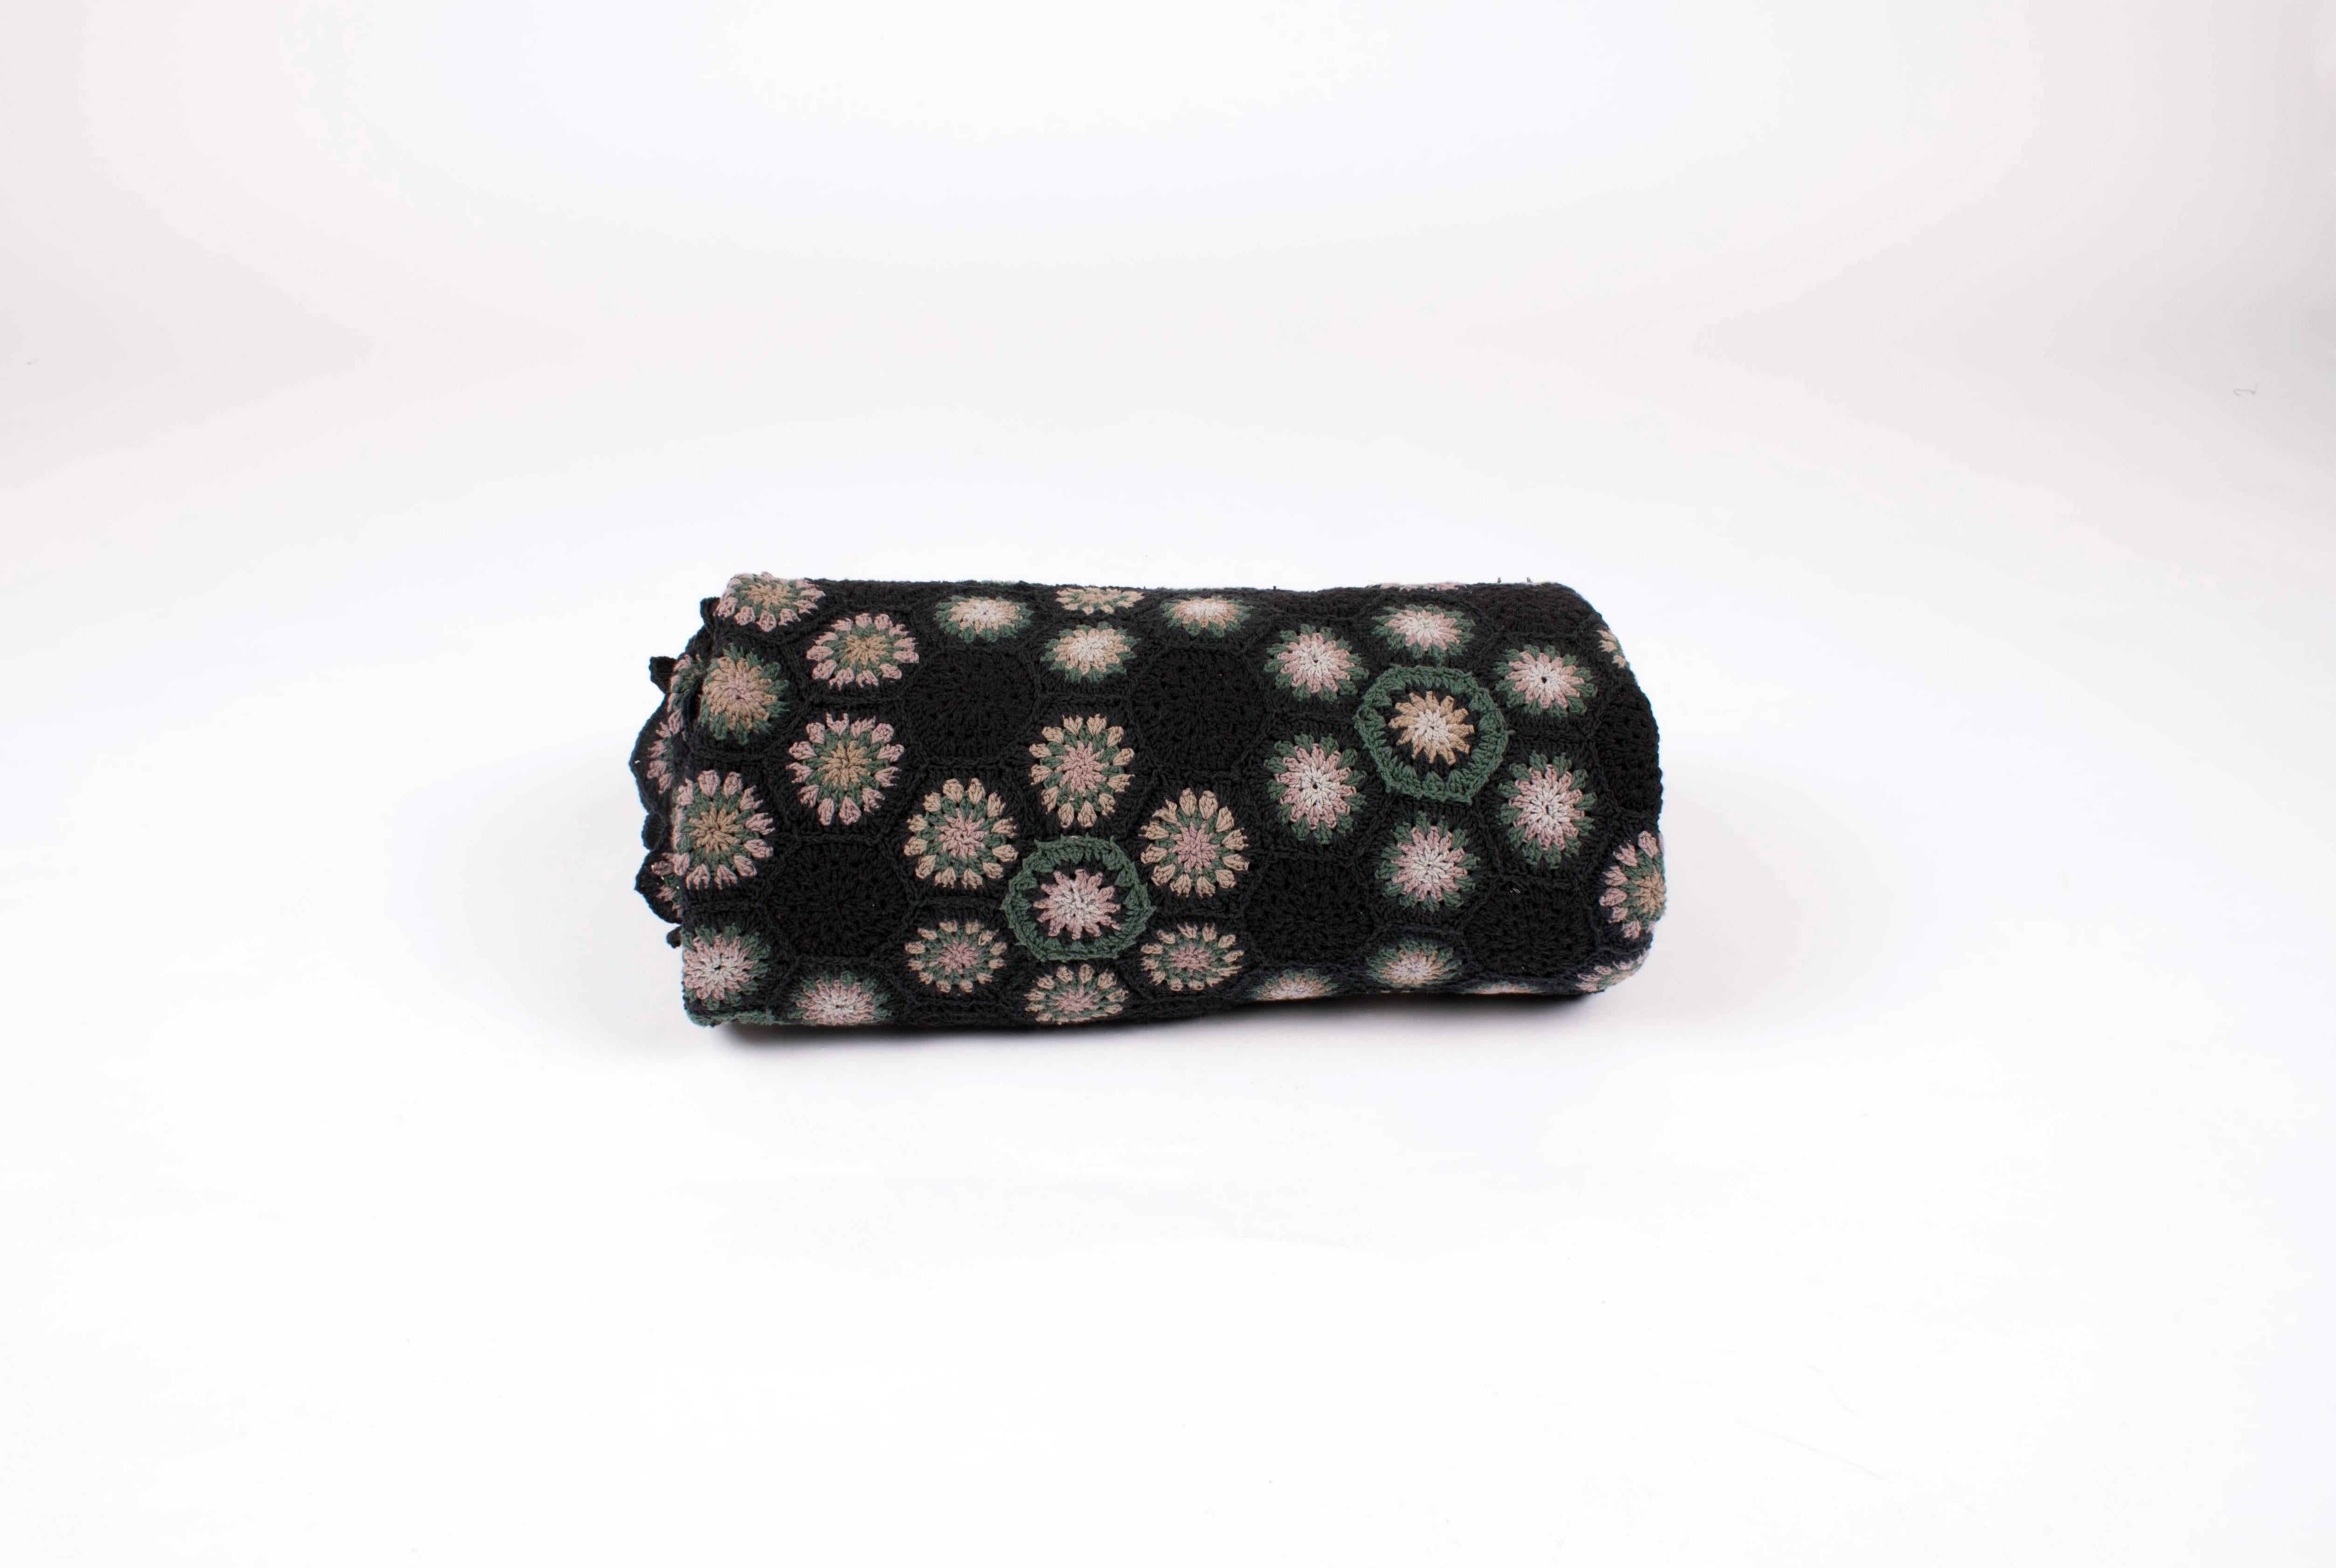 Asian Art Deco Style Crocheted Medallion Blanket Throw 09 Dark Neutral Tones For Sale